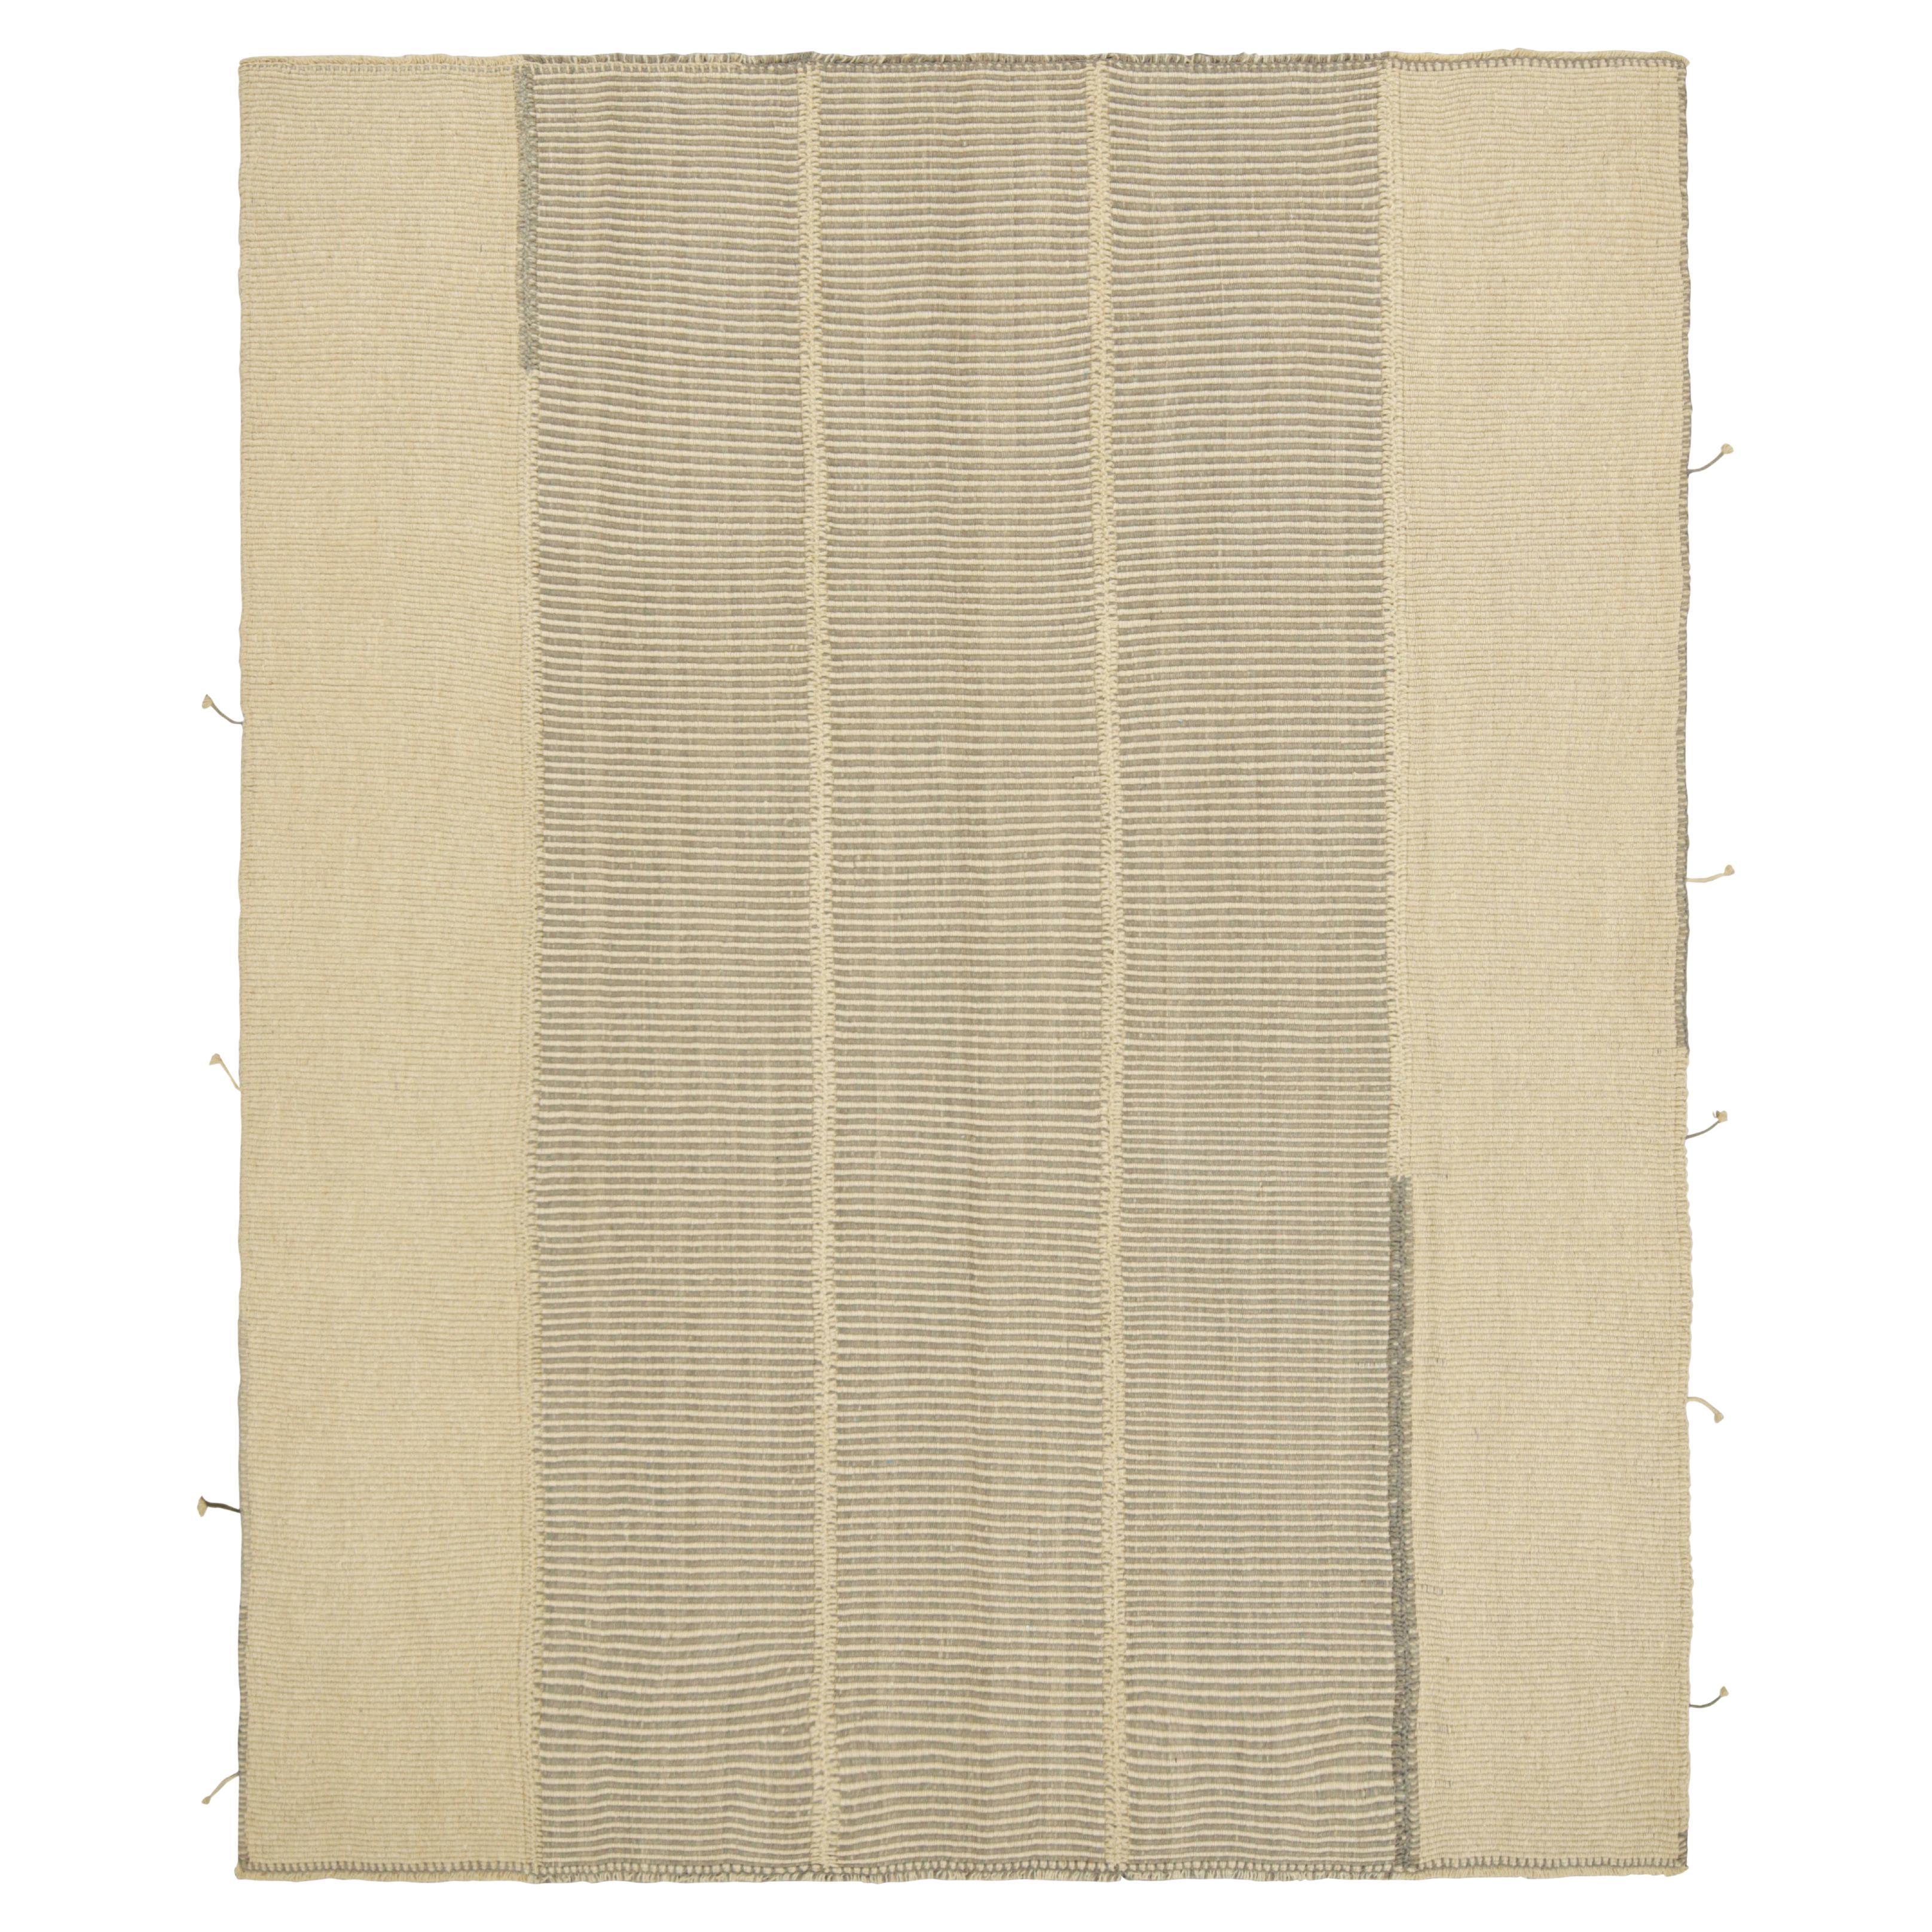 Rug & Kilim’s Contemporary Kilim in Cream White and Gray Textural Stripes